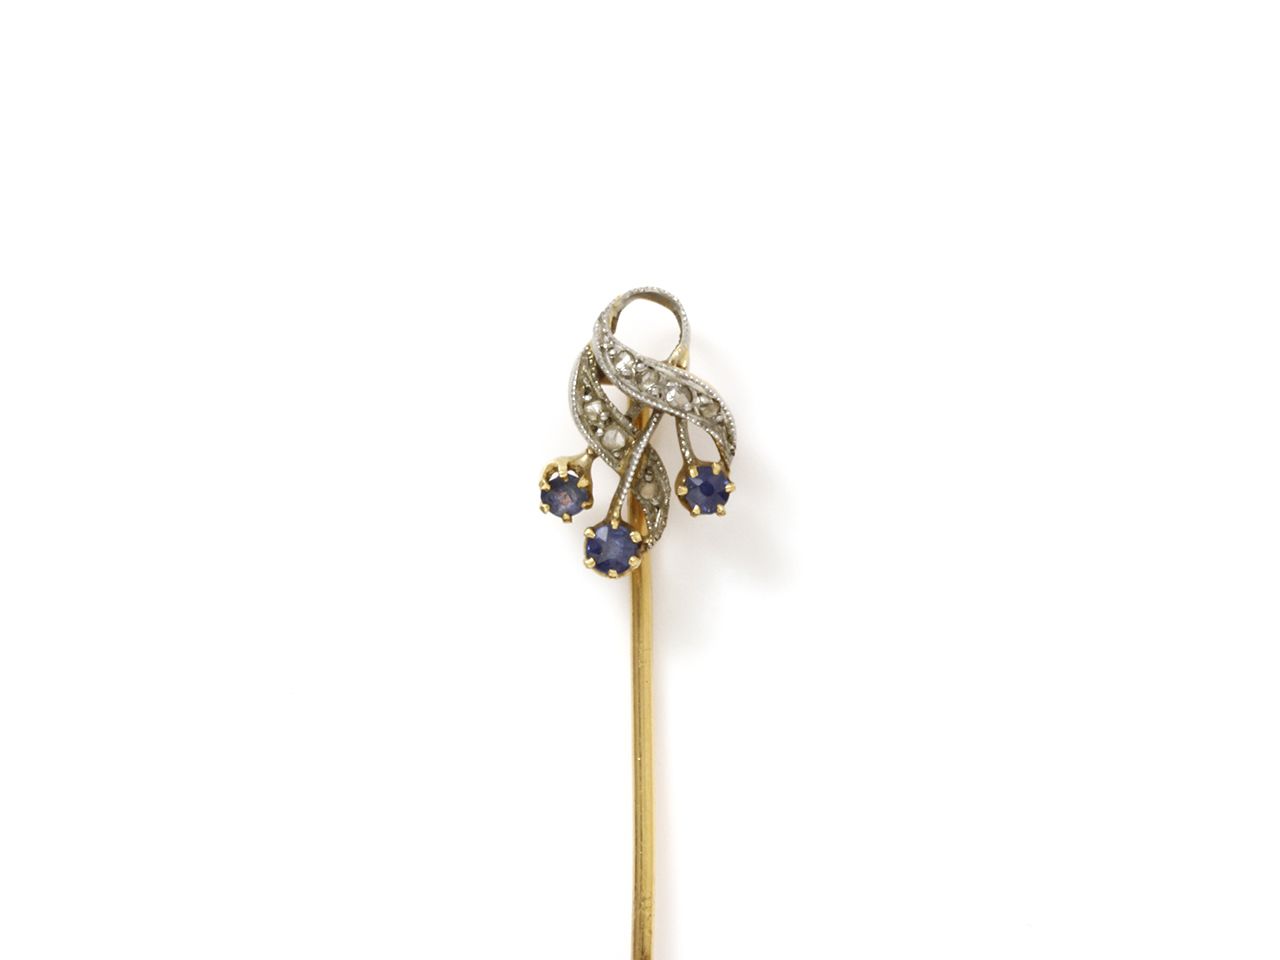 Null 黄金750和铂金850千分之一的领带夹，风格化的花卉装饰被小的圆形刻面蓝宝石和钻石玫瑰所强化。十九世纪末、二十世纪初的法国作品。毛重：2.10克。